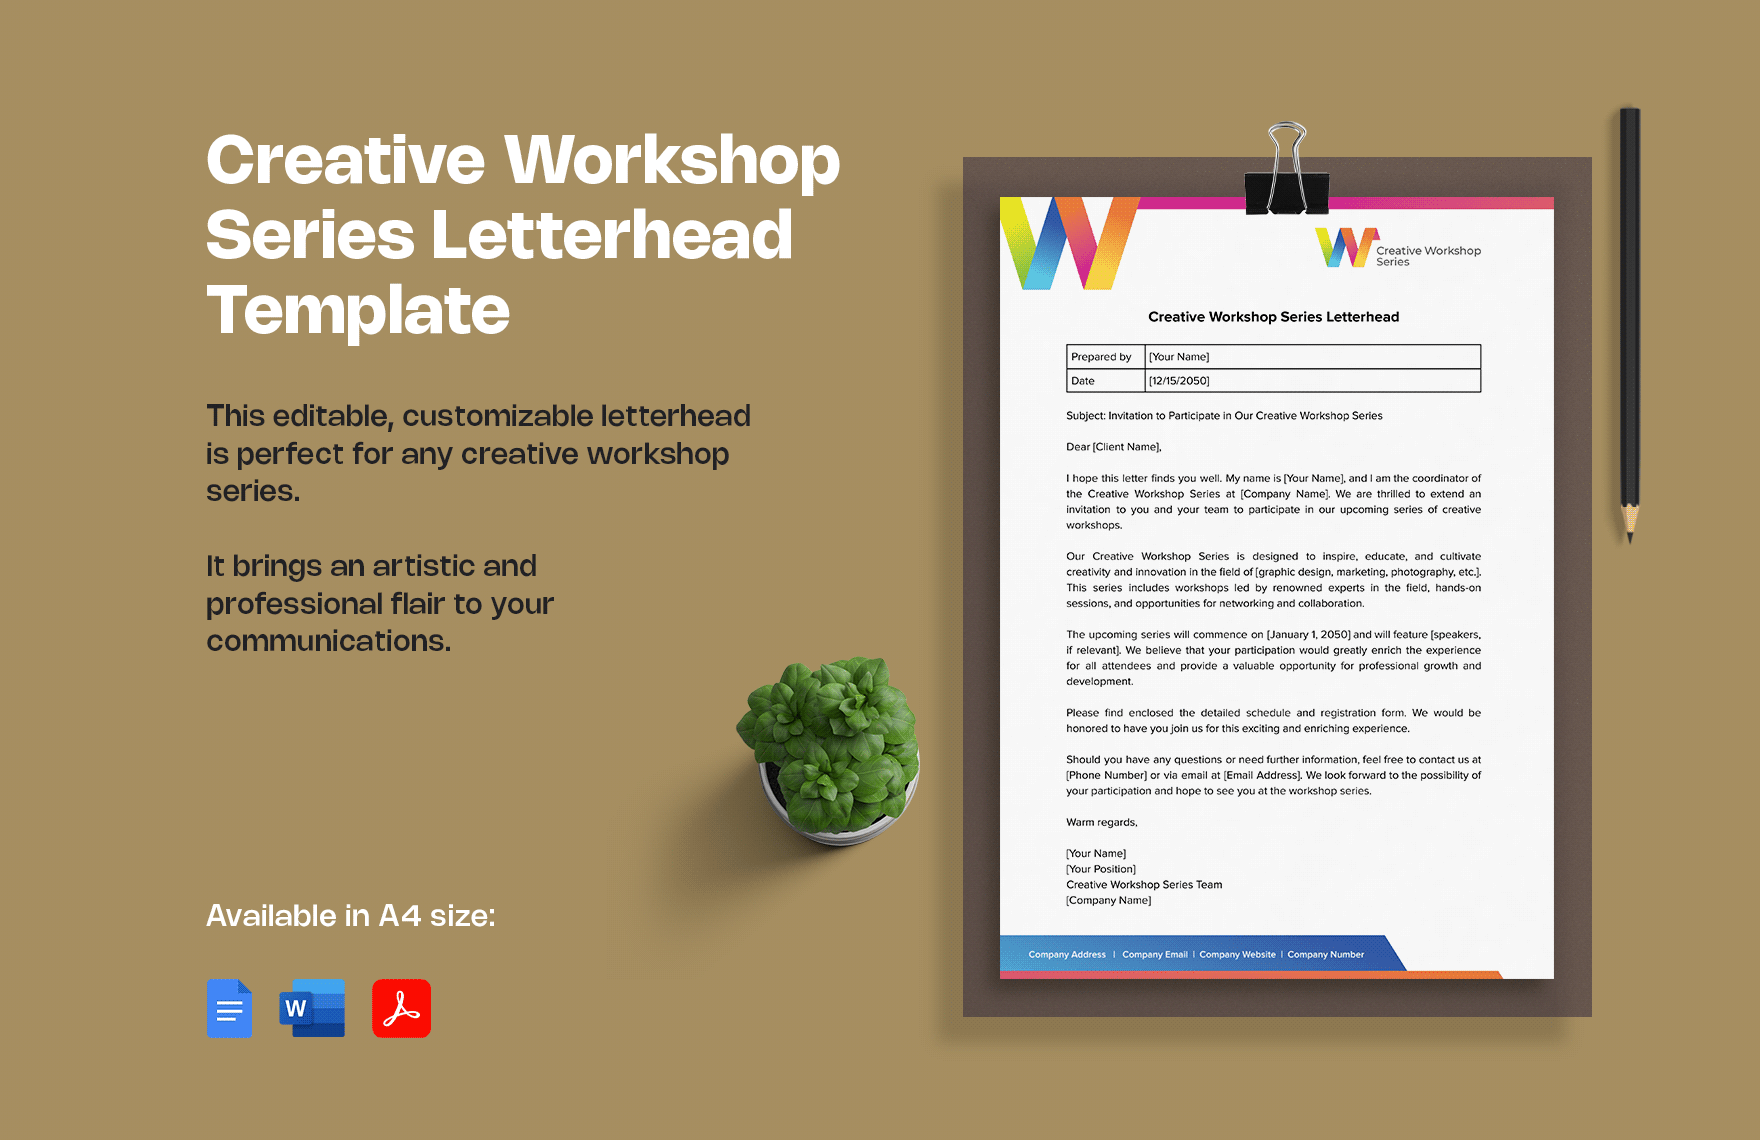 Creative Workshop Series Letterhead Template